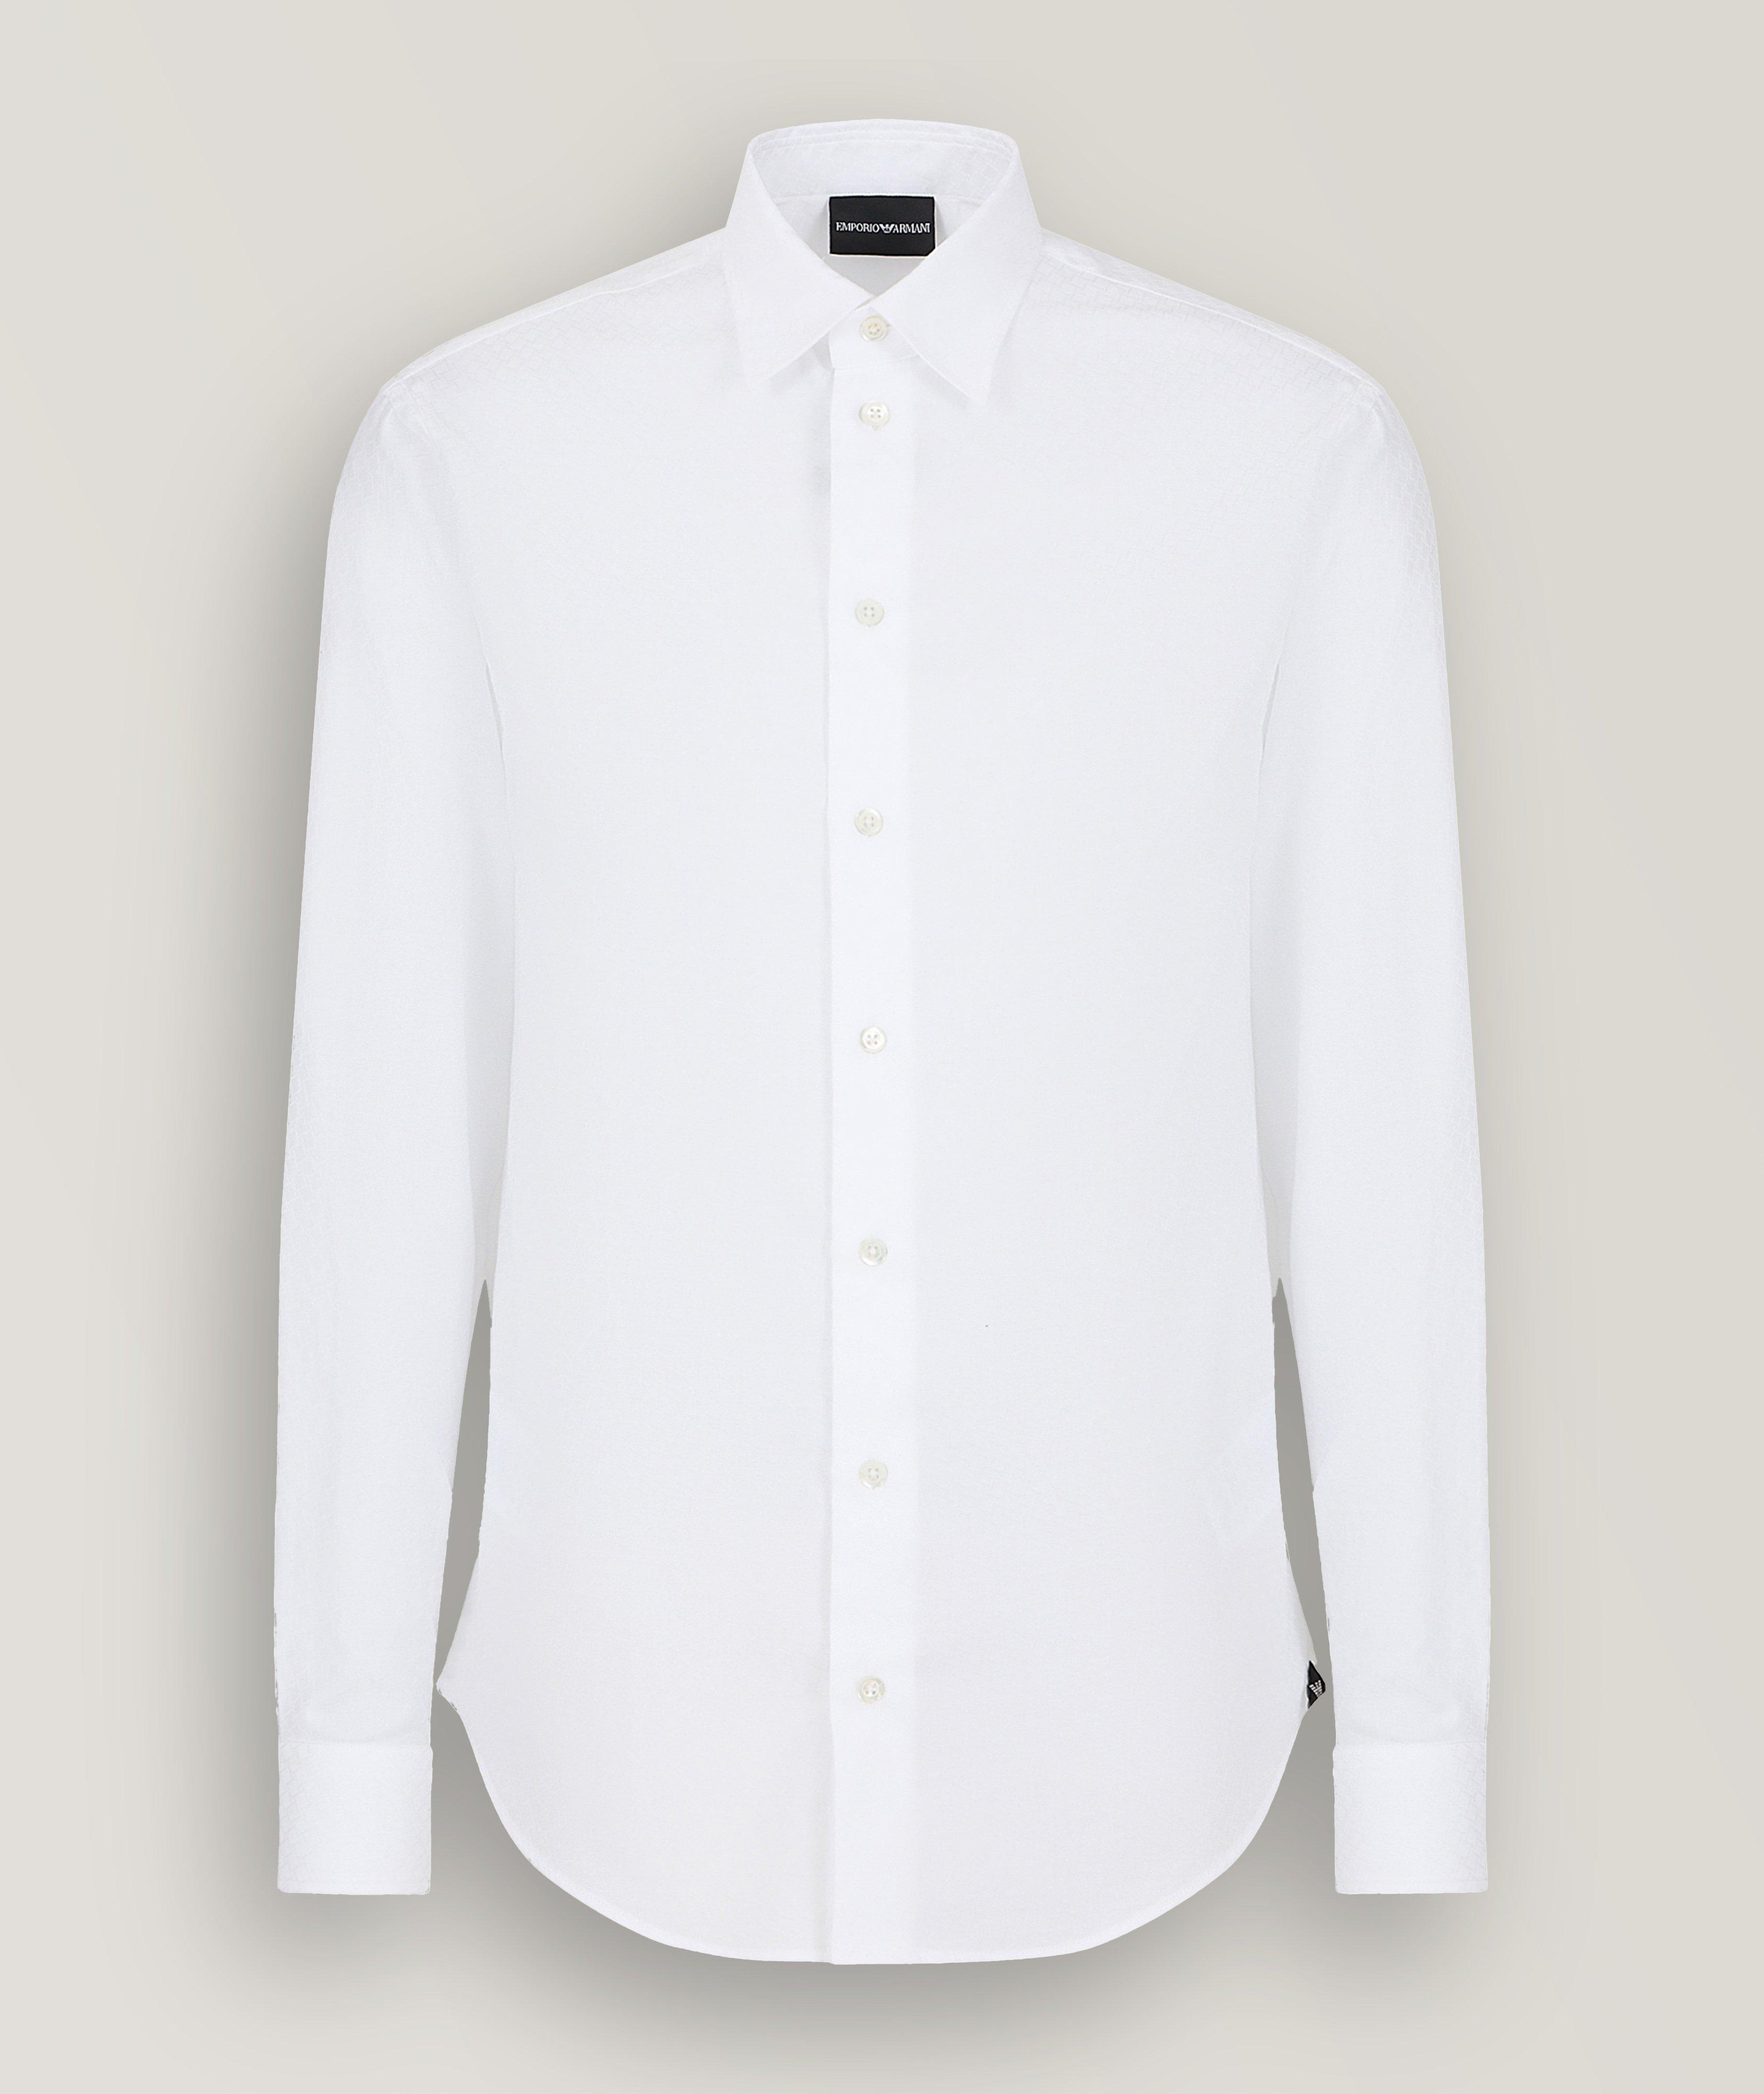 Jacquard Cotton Sport Shirt image 0